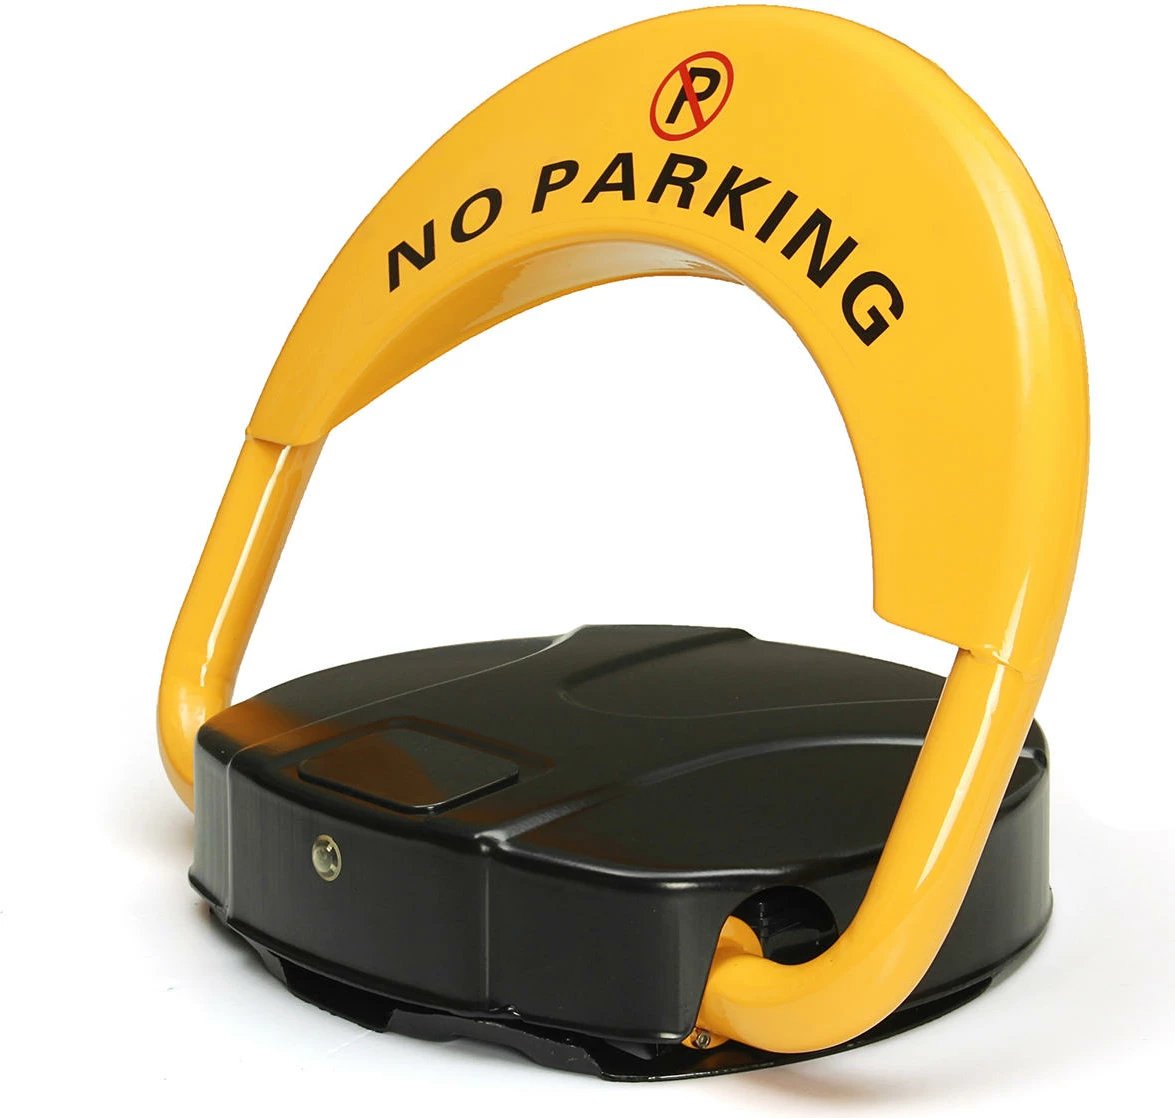 Bllokues Parkingu Smart